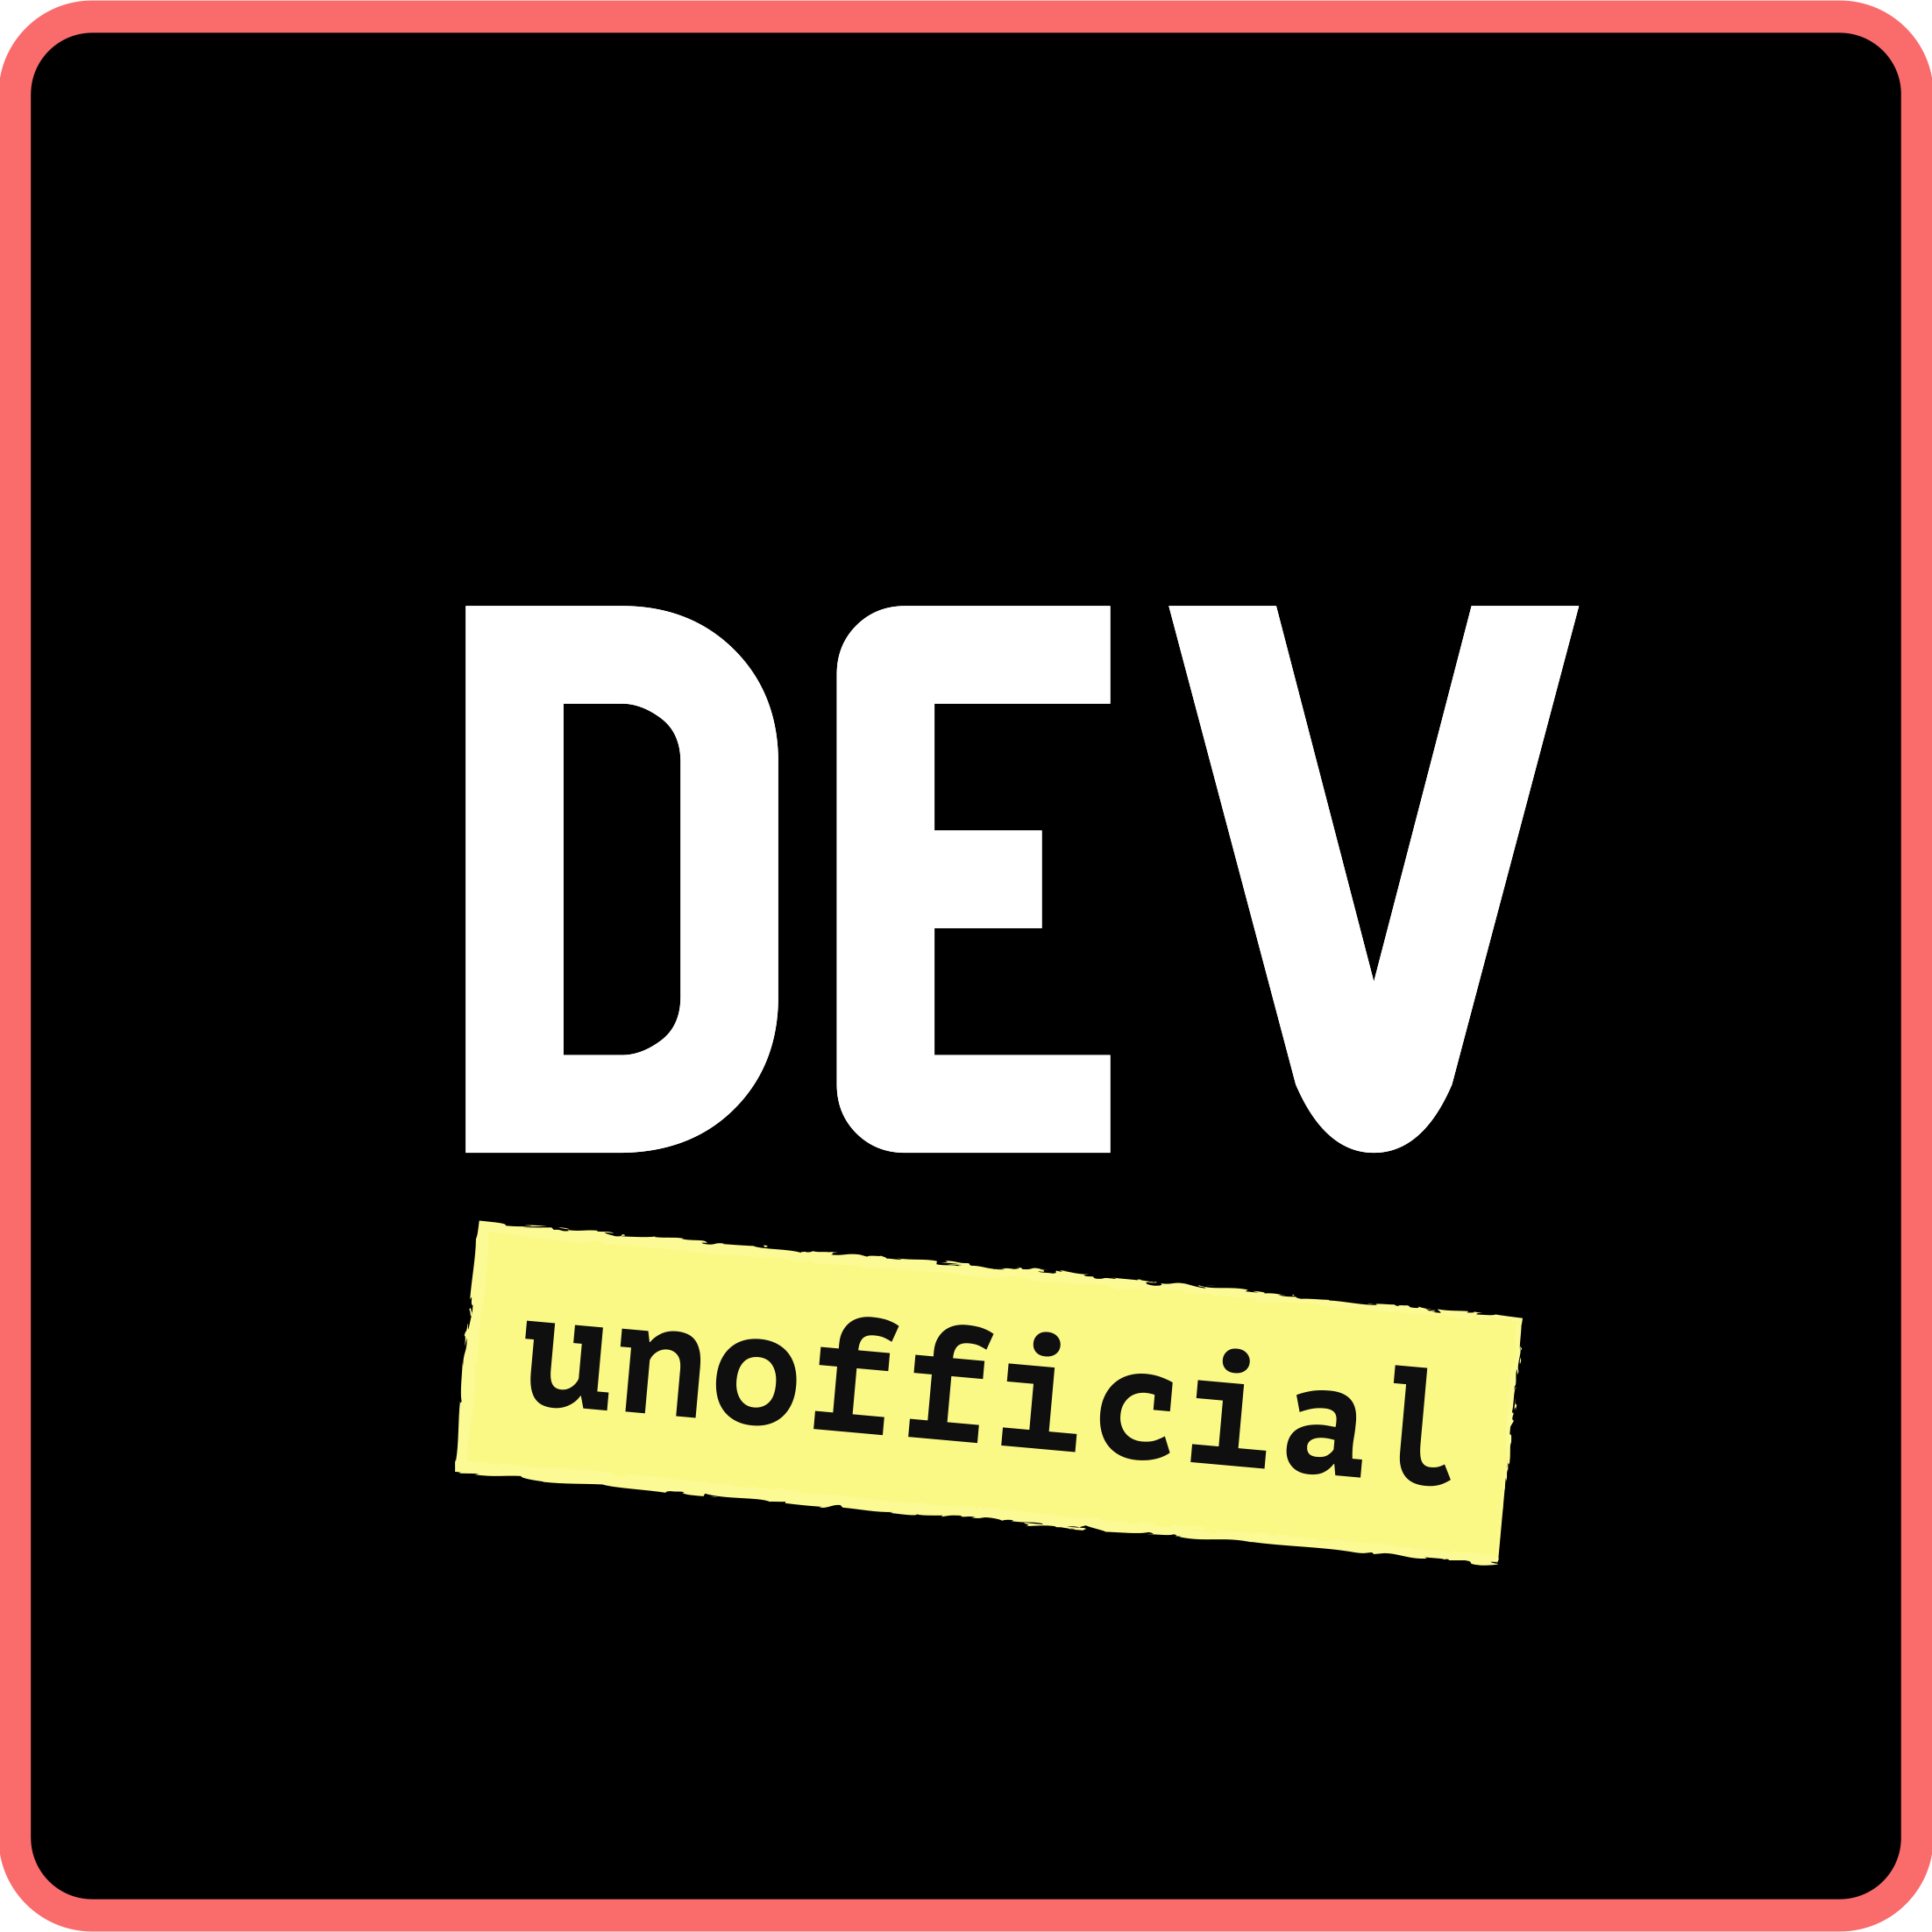 Dev unofficial app